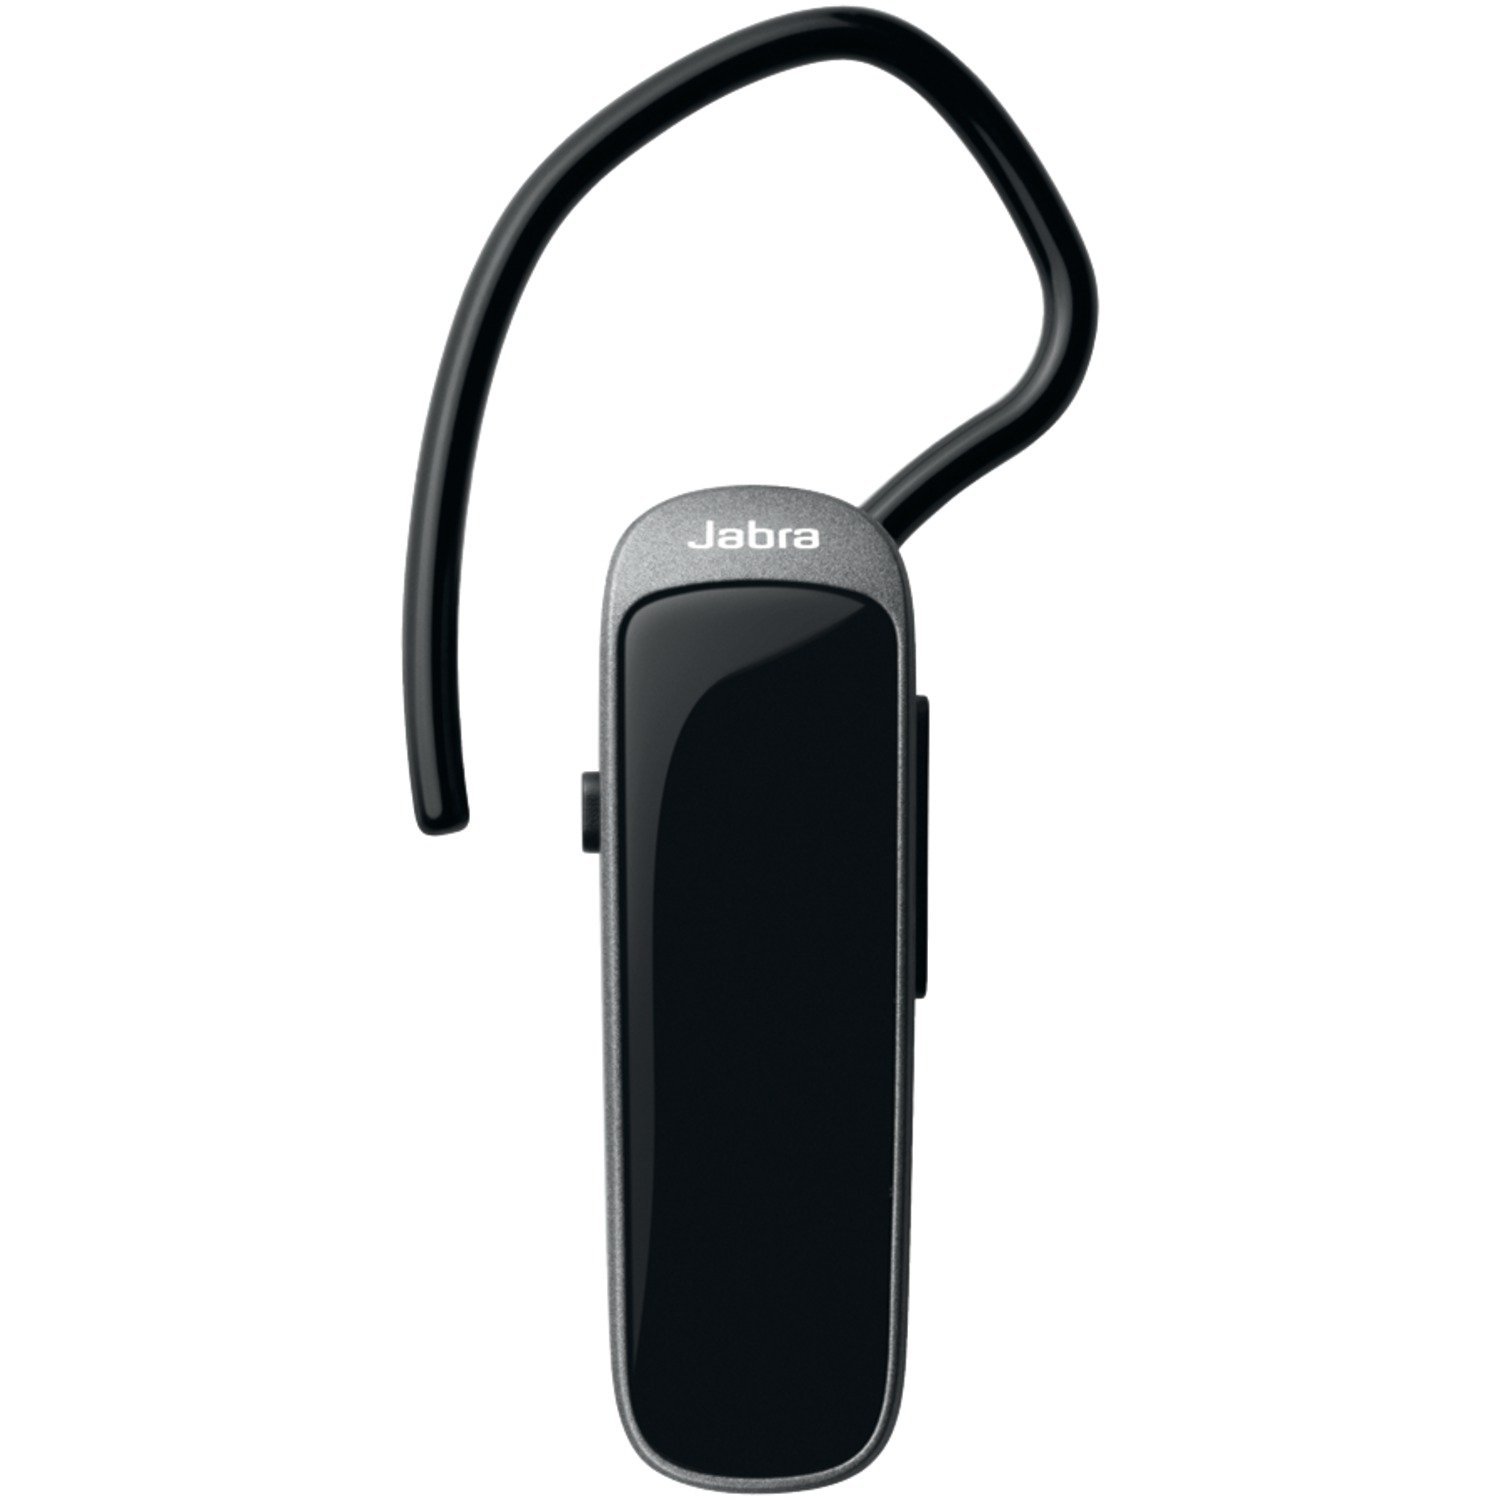 Bluetooth Jabra mini HF černá (EU Blister)